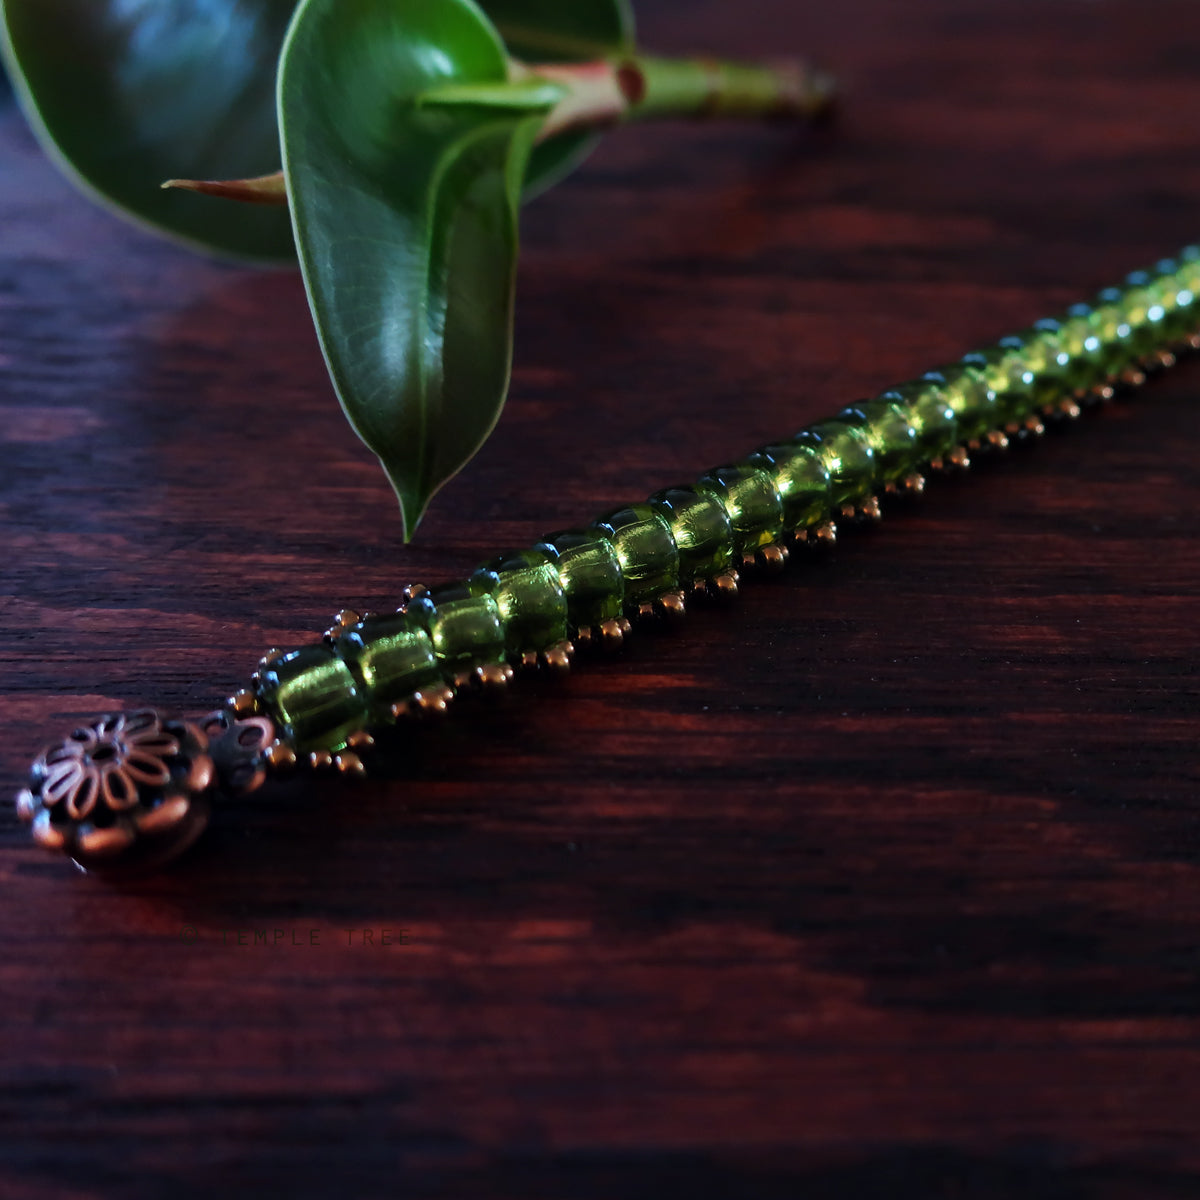 Temple Tree Boho Glass Bead Caterpillar Weave Bracelet - Peridot Green and Bronze